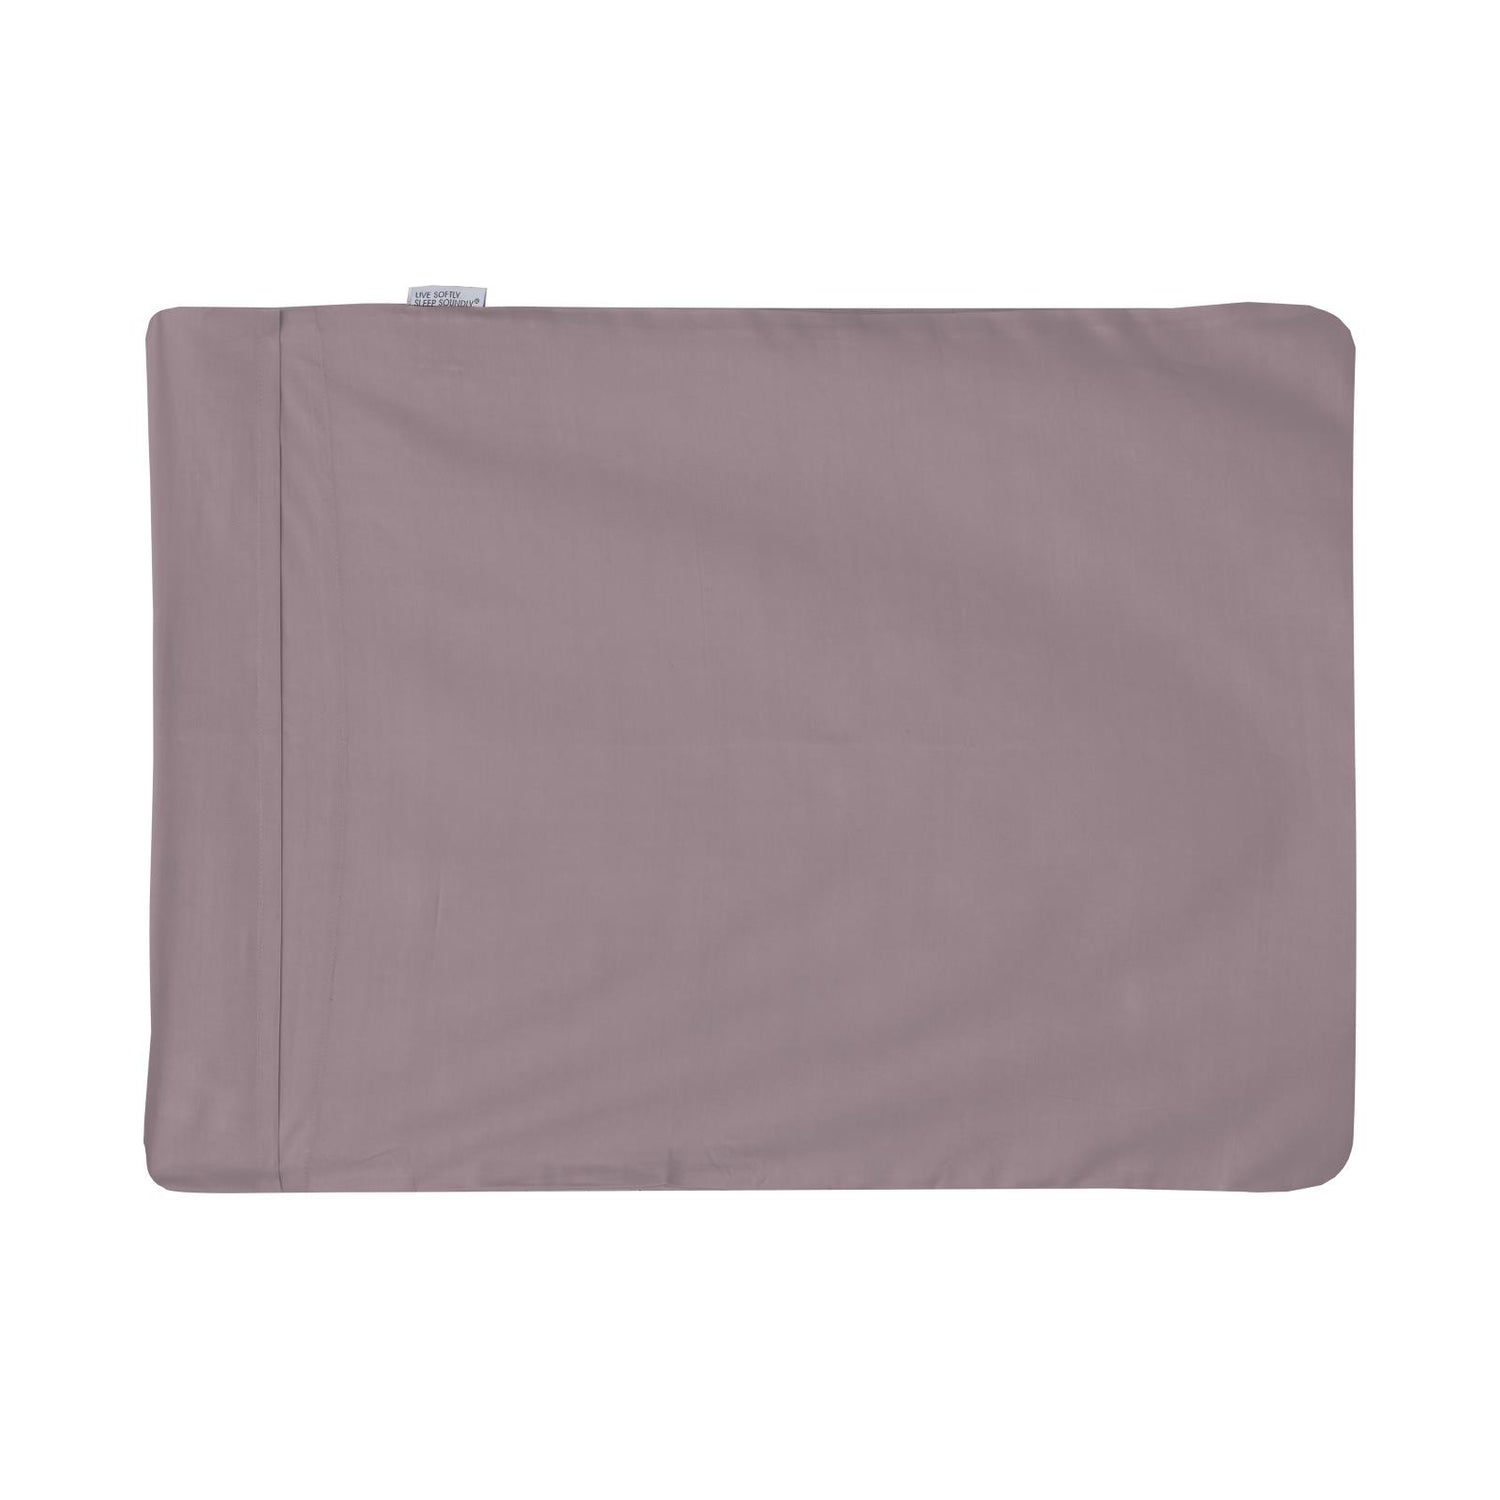 Foldover Pillowcase in Quail